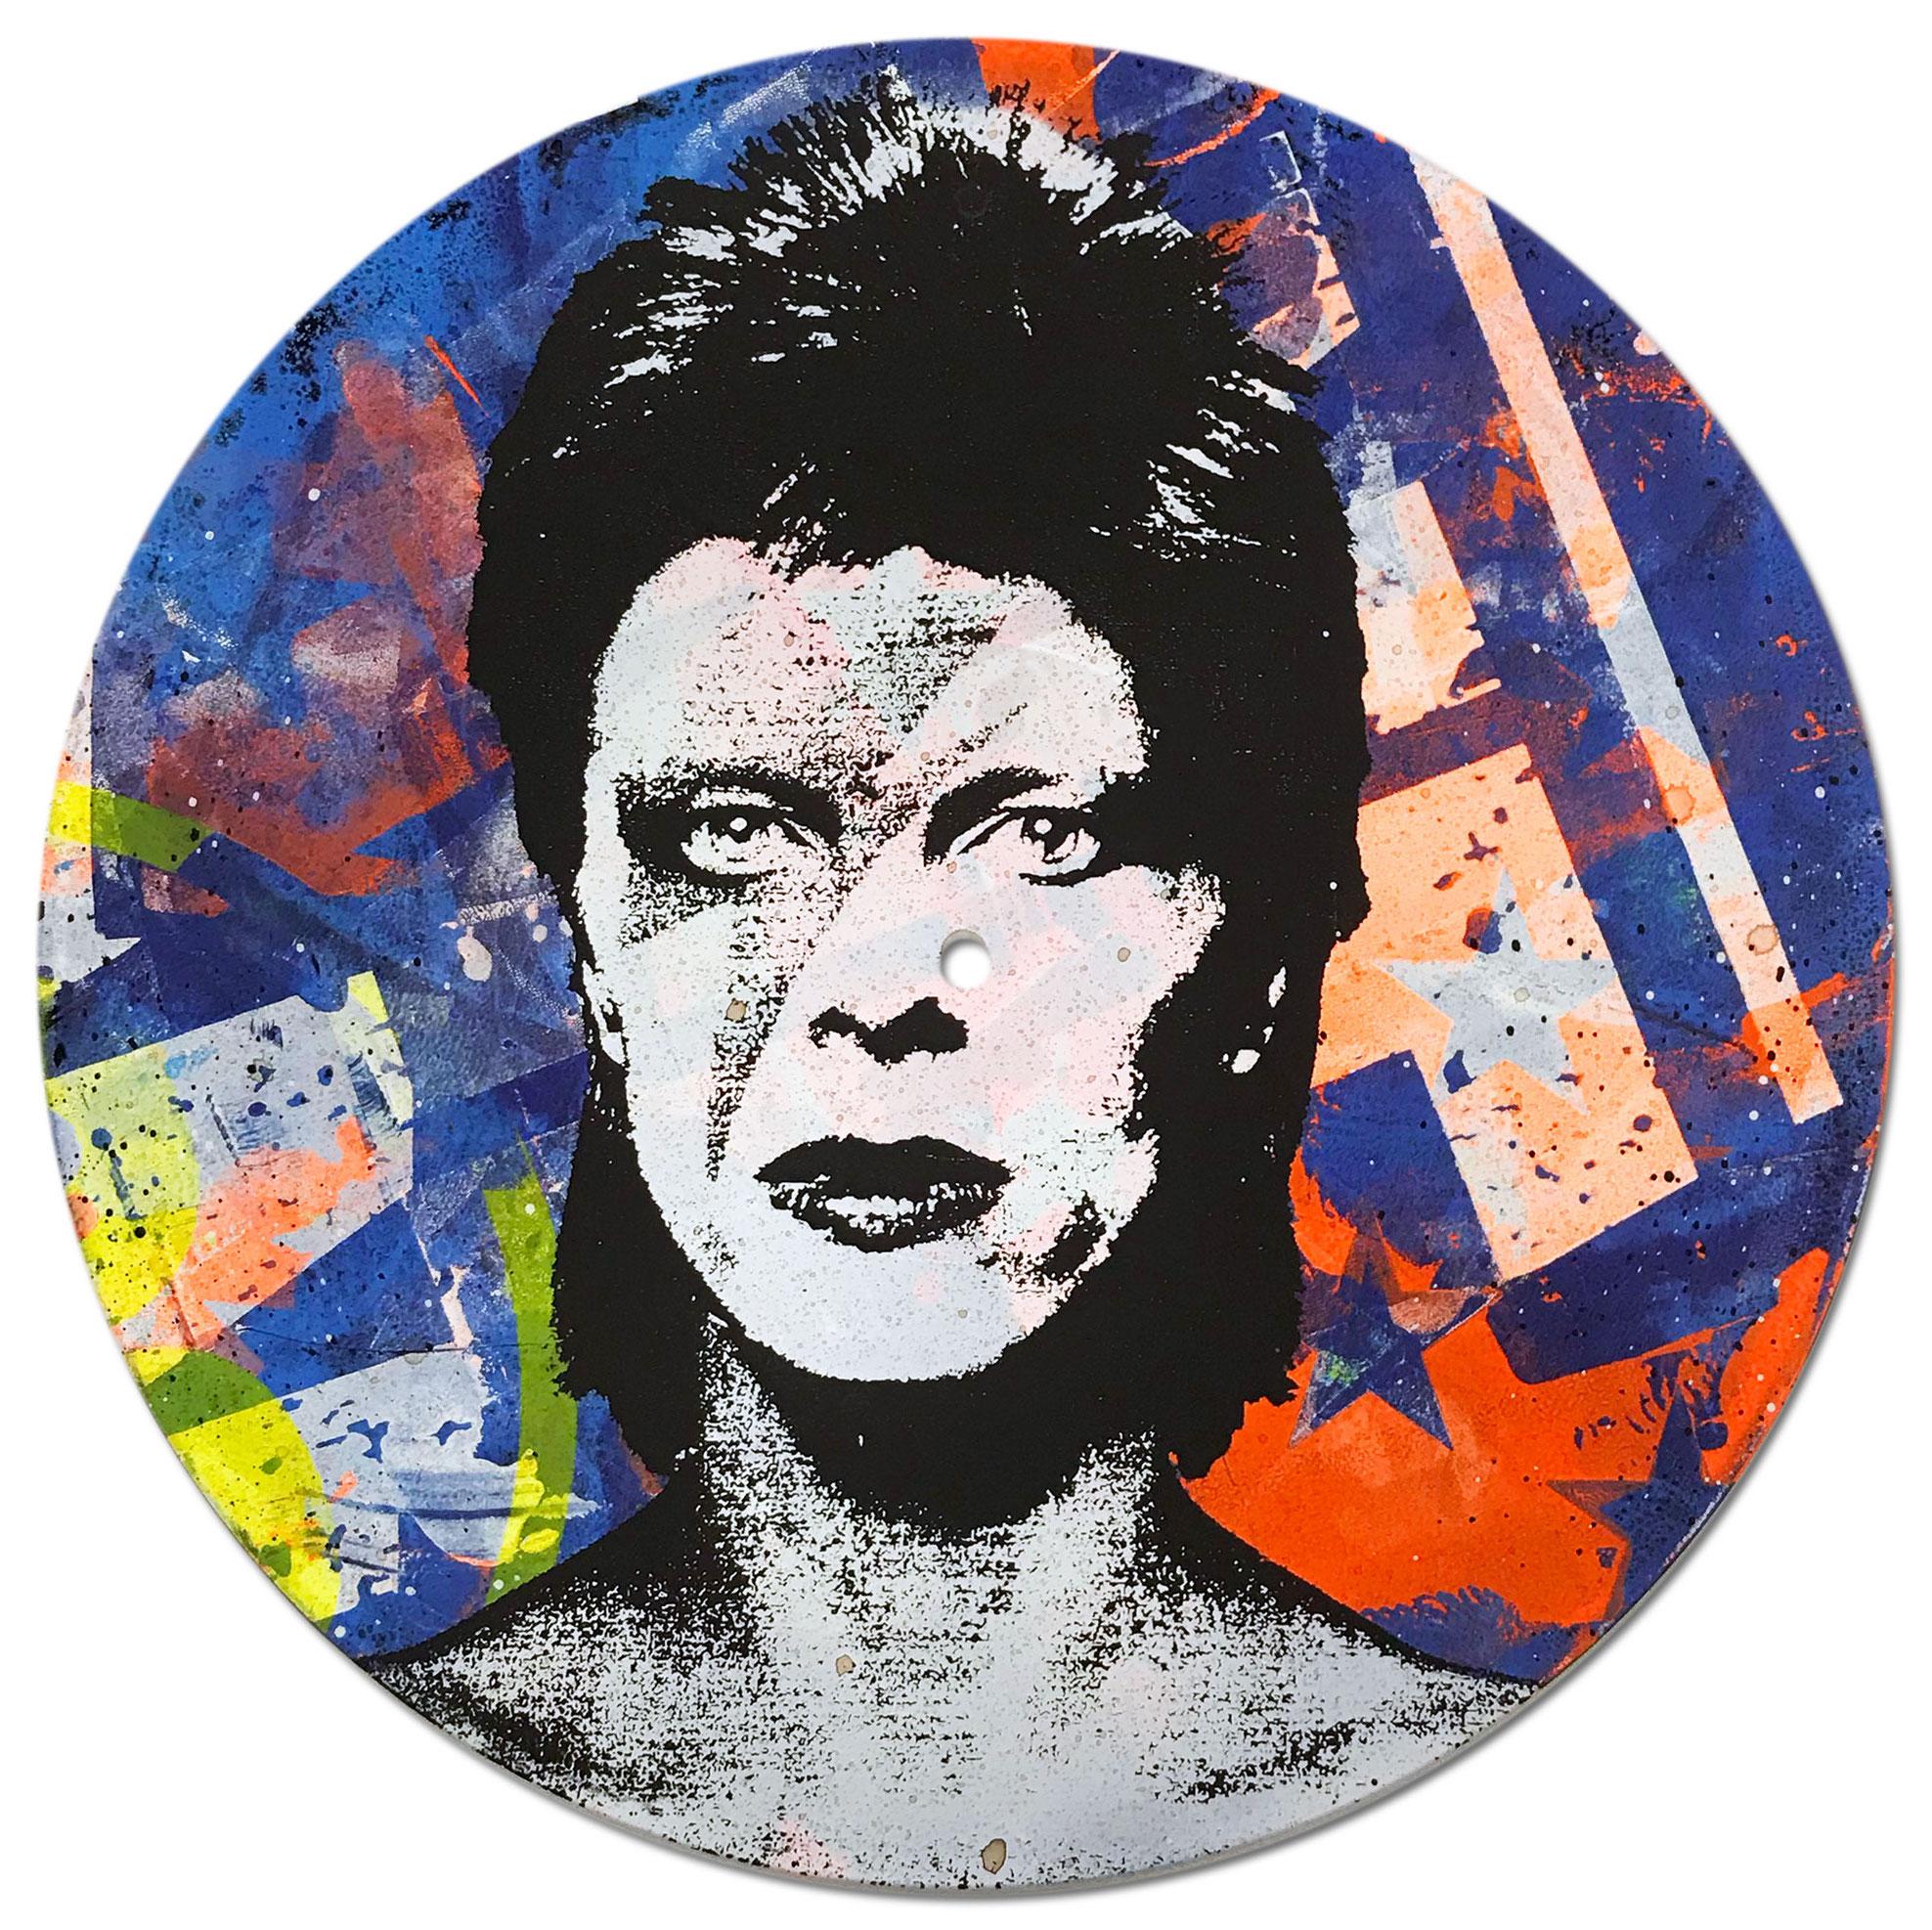 David Bowie Vinyl 1-10, Greg Gossel Pop Art LP Record (Singles & Sets Available) For Sale 5